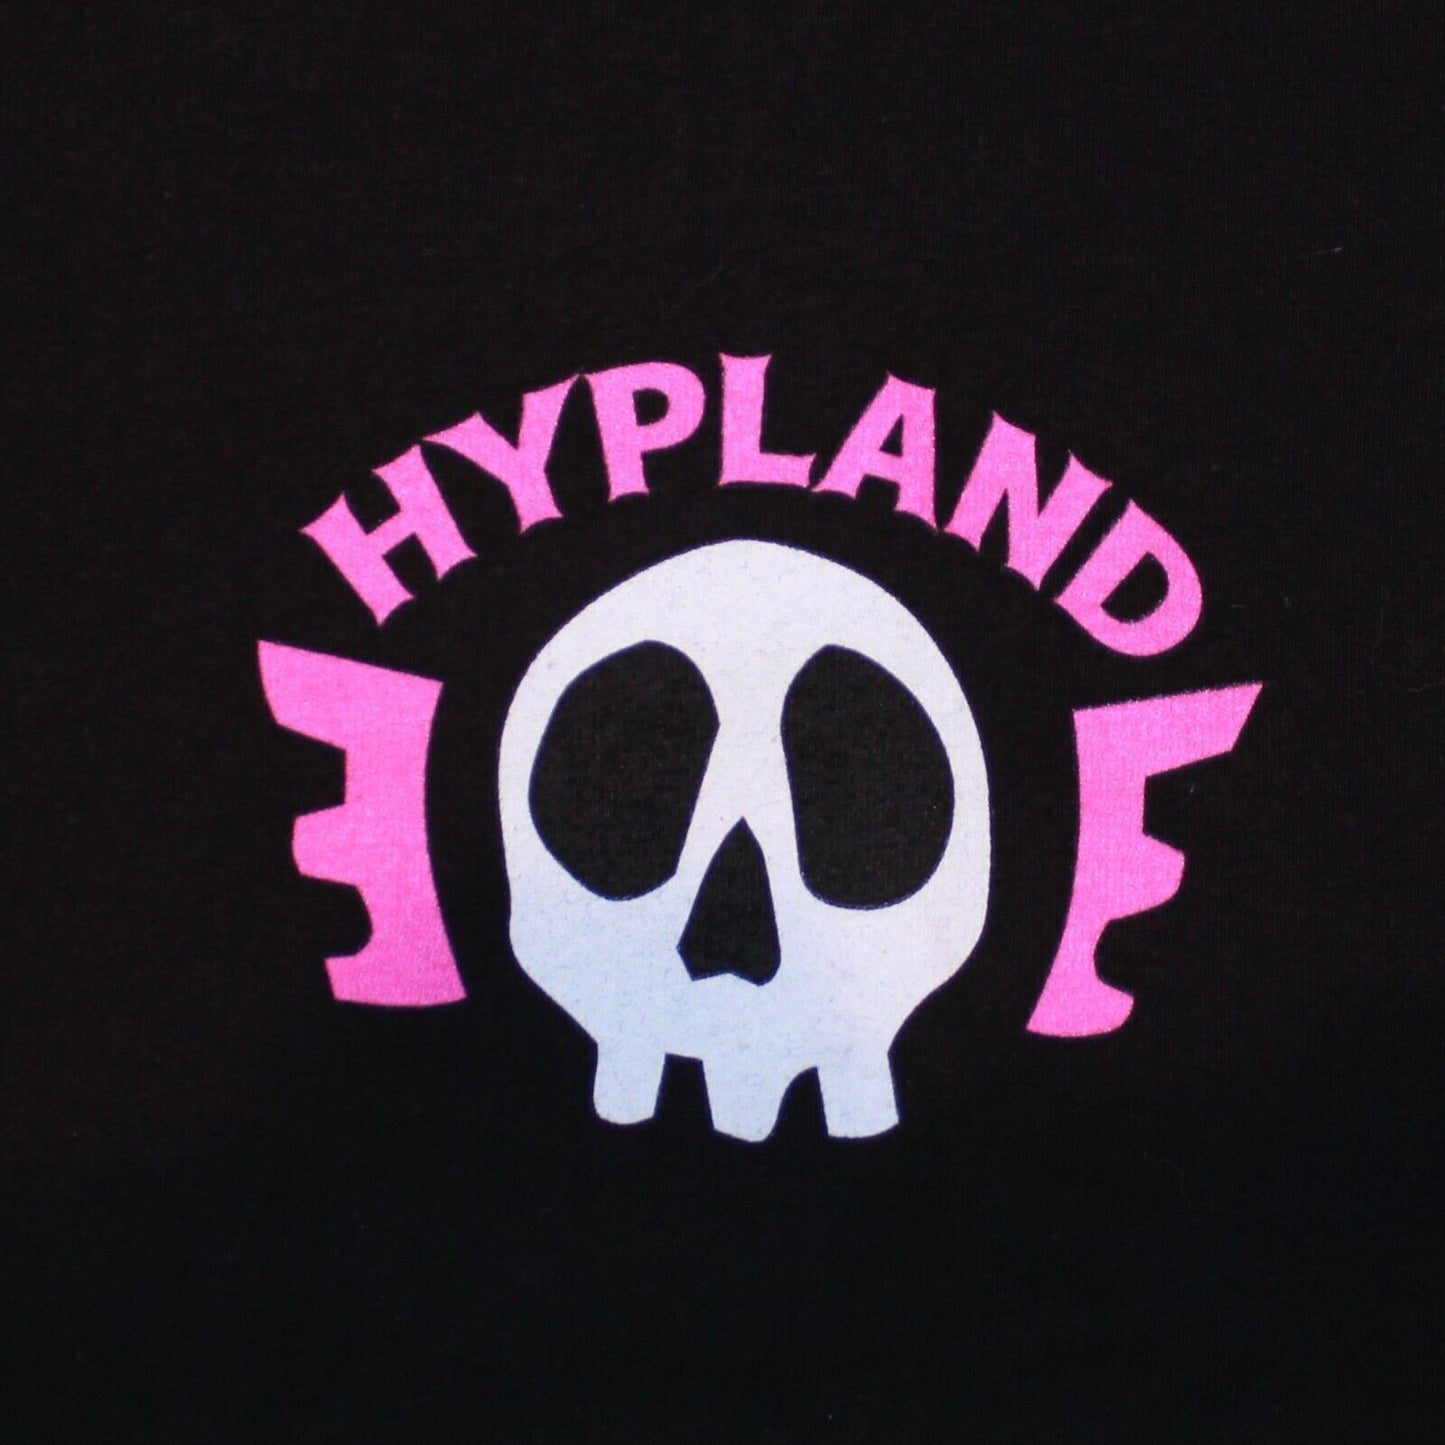 Hypland & Hunter x Hunter Collab Mens T-Shirt - Small 2011